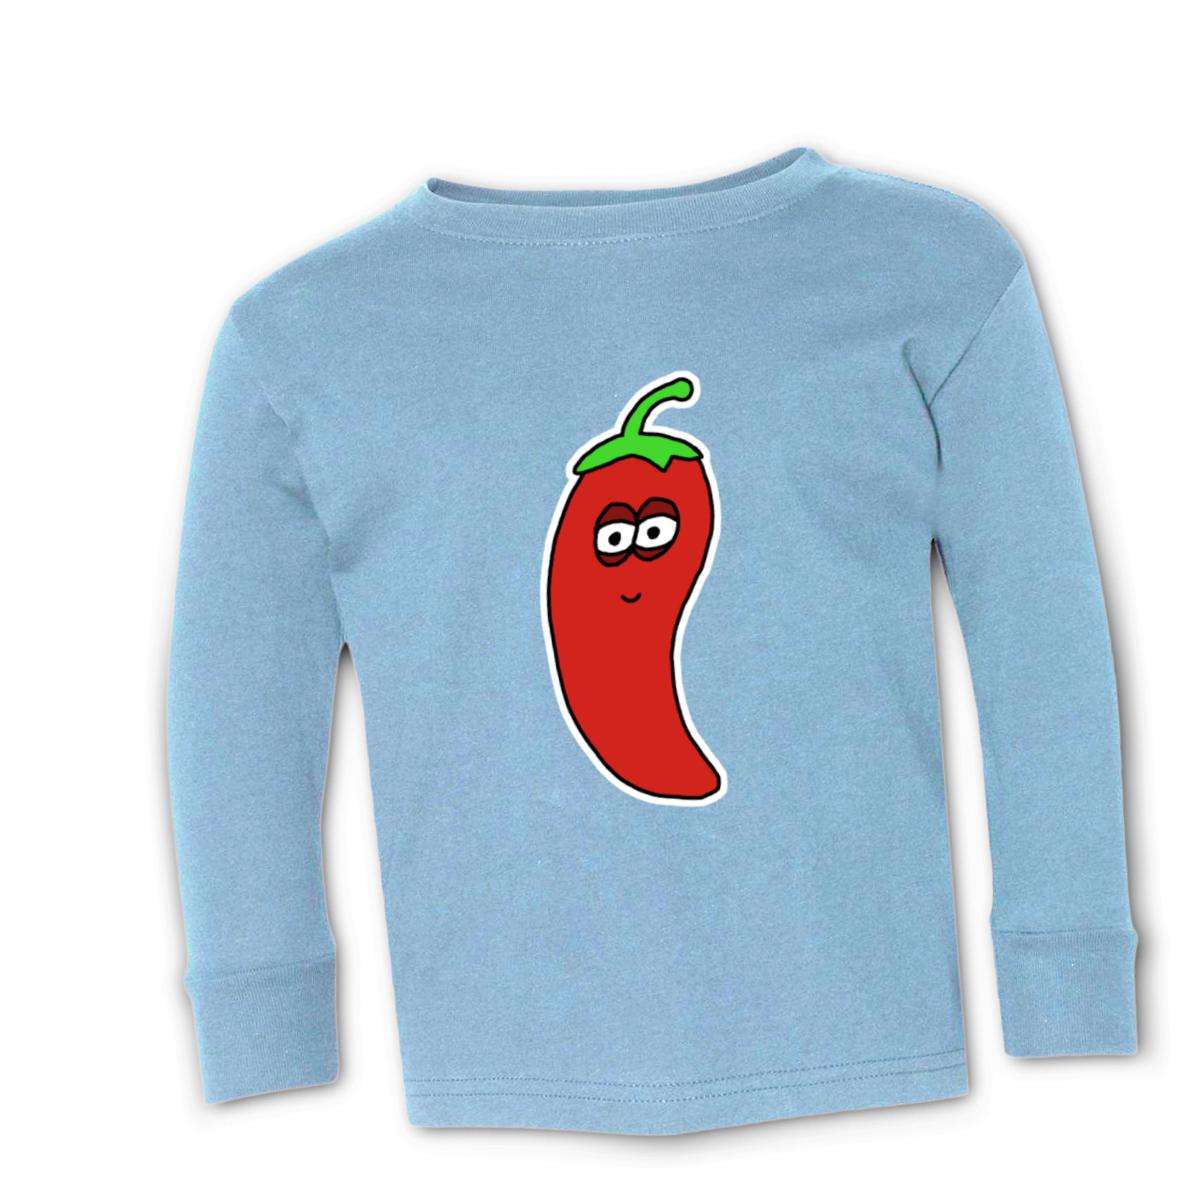 Chili Pepper Kid's Long Sleeve Tee Large light-blue